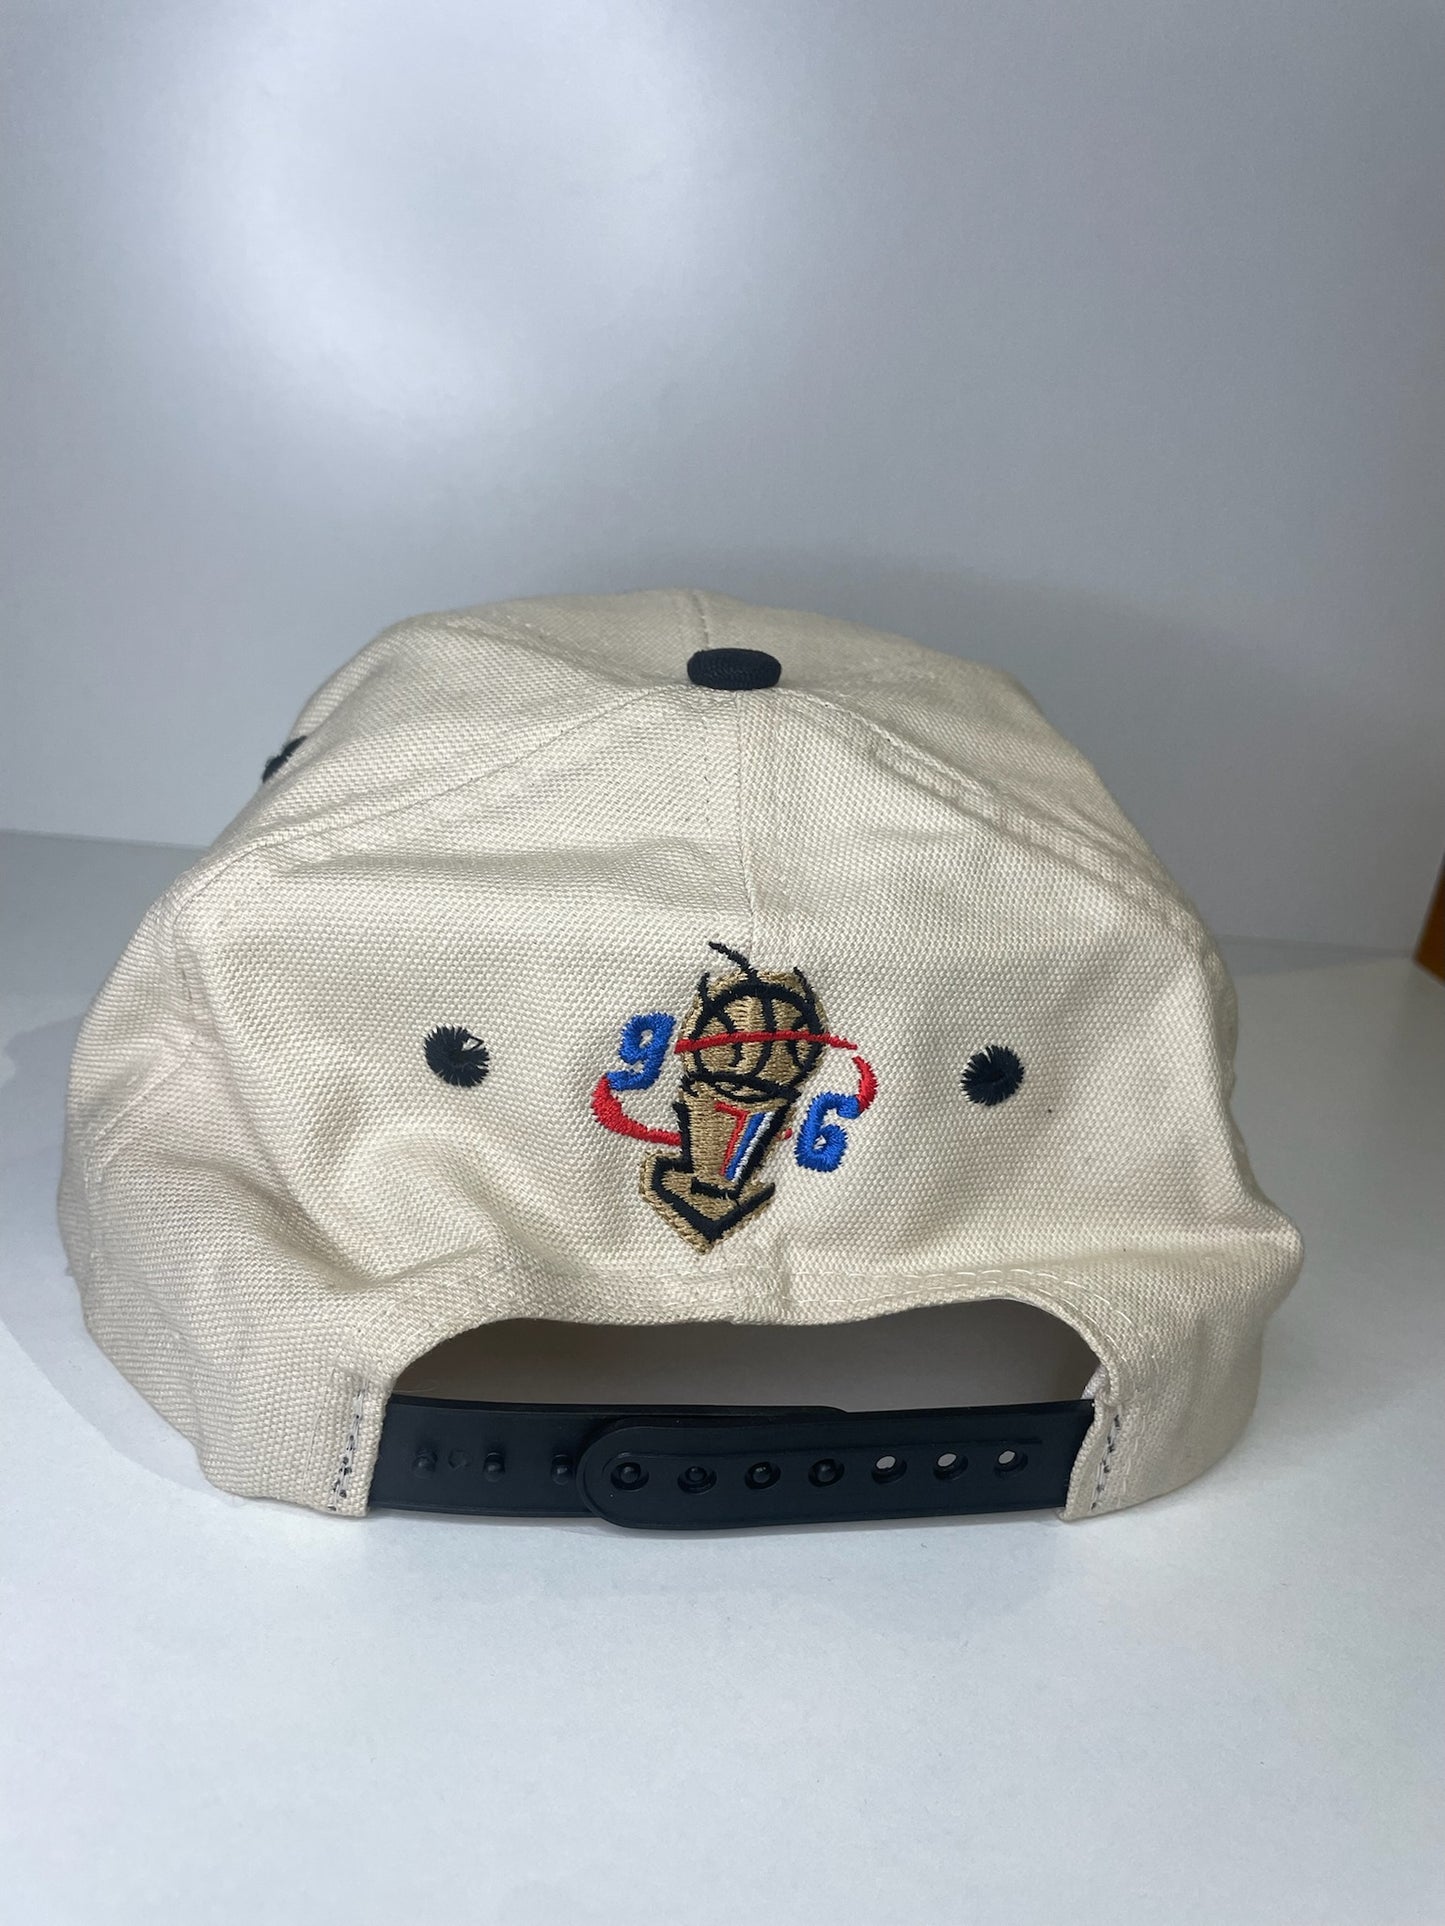 VINTAGE 90s CHICAGO BULLS "CHAMPION 1996" LOGO ATHLETIC SNAPBACK CAP HAT